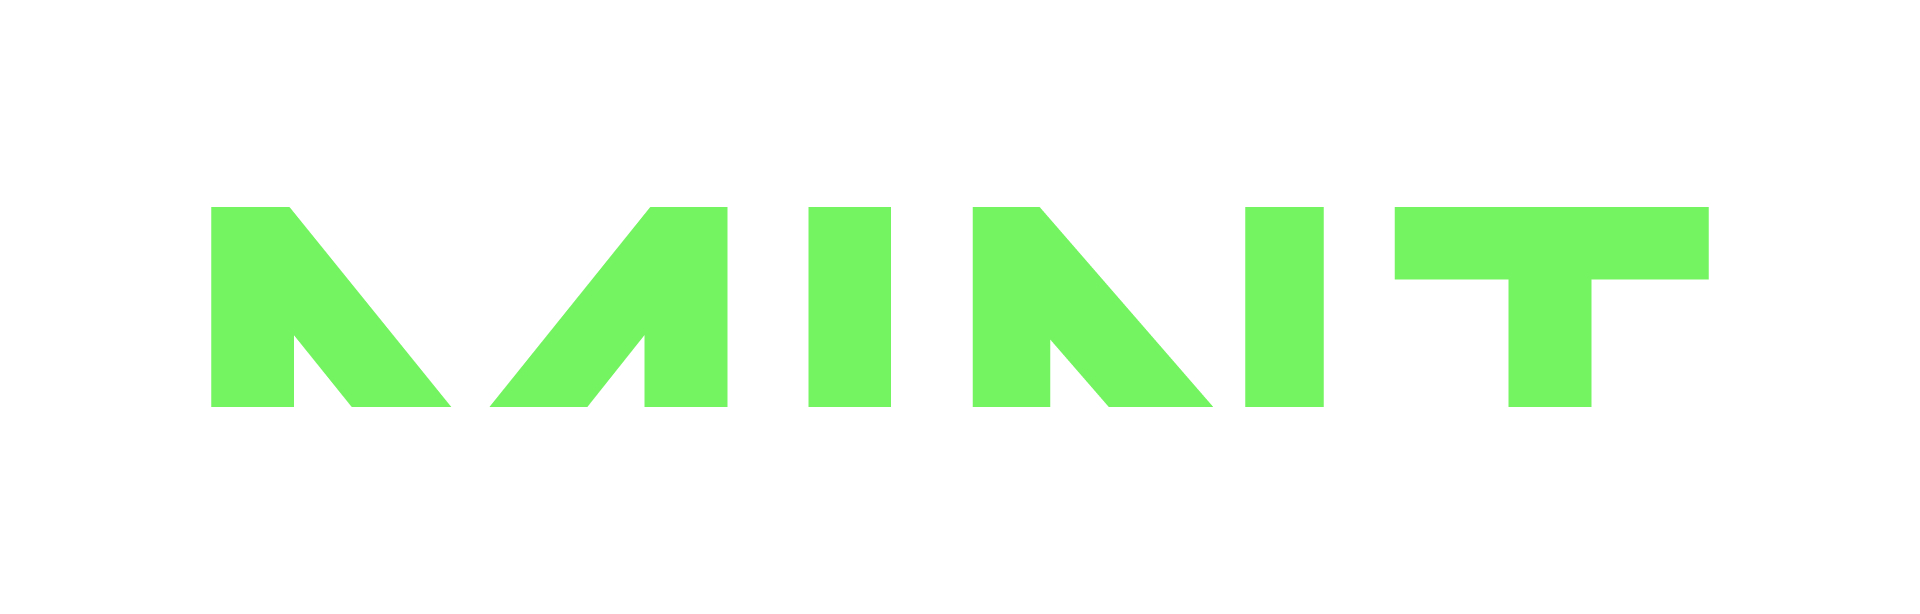 Download Gnu Controversy Linux Logo Naming Mint Software HQ PNG Image |  FreePNGImg